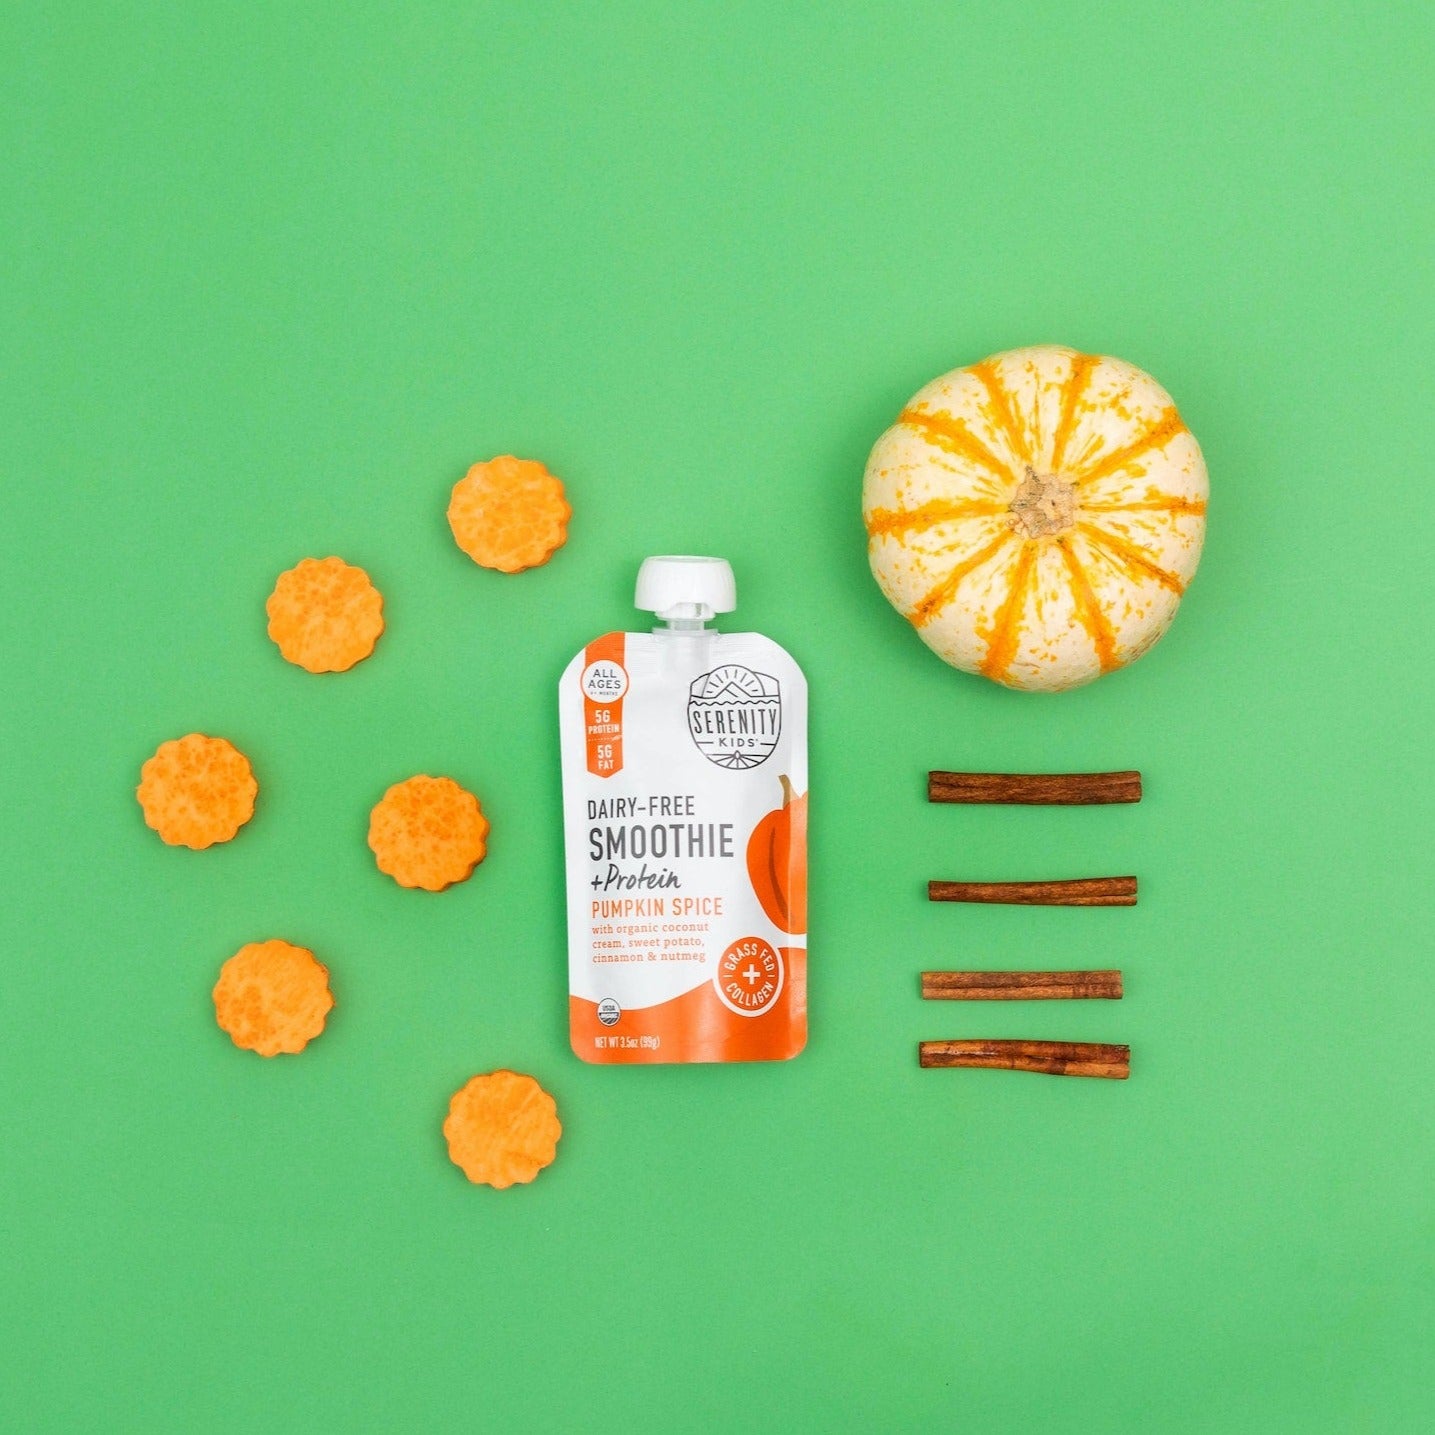 Pumpkin Spice Dairy-Free Smoothie + Protein - Serenity Kids - Combo Ingredients